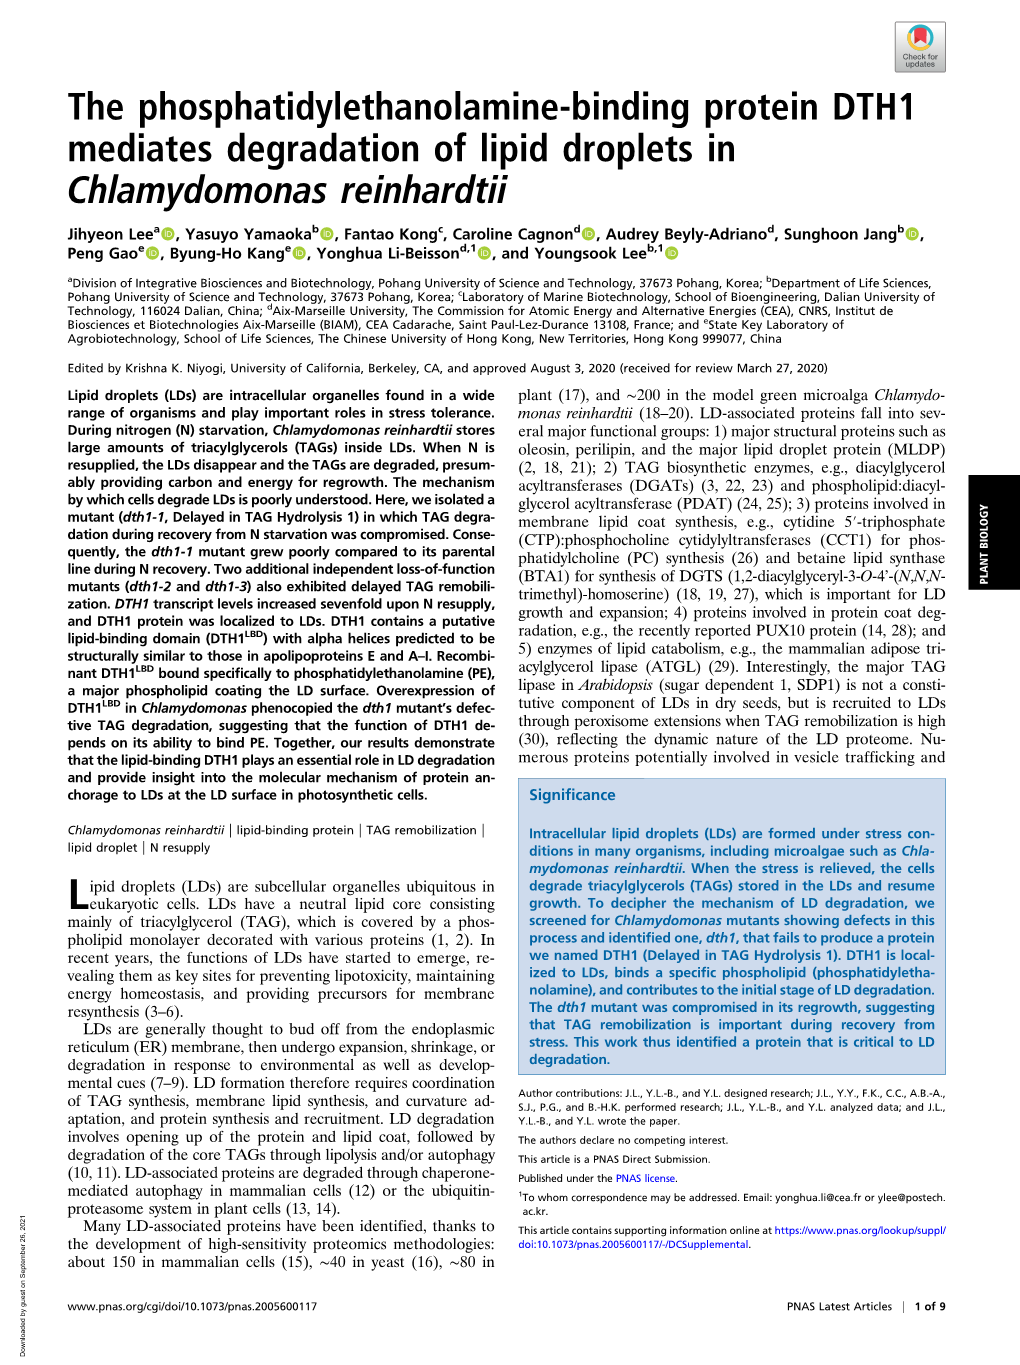 The Phosphatidylethanolamine-Binding Protein DTH1 Mediates Degradation of Lipid Droplets in Chlamydomonas Reinhardtii